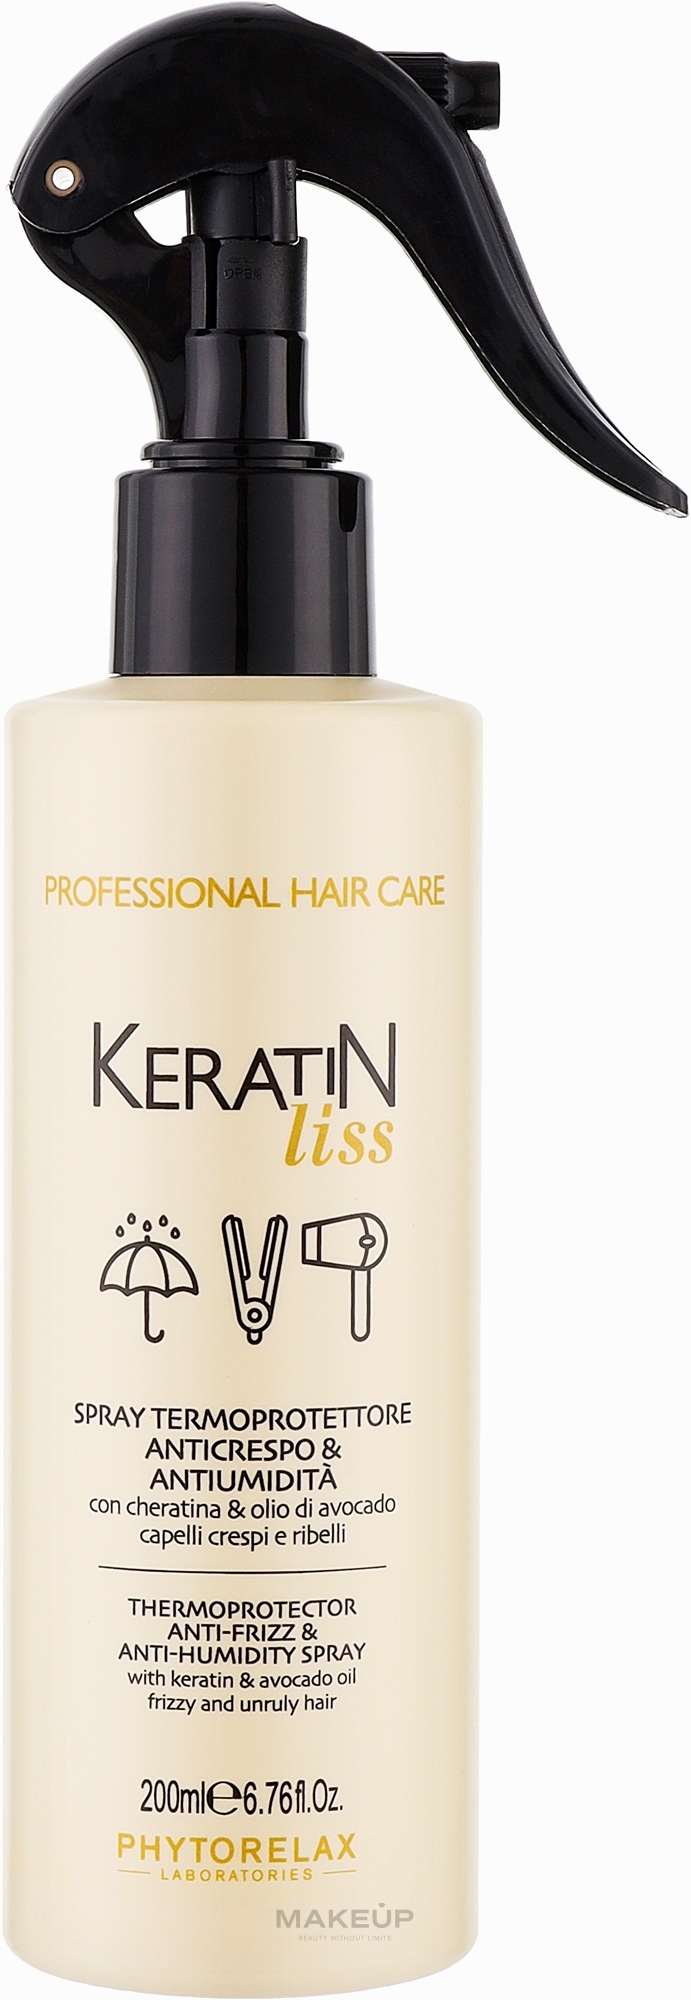 Термозащита водостойкая для разглаживания волос - Phytorelax Laboratories Keratin Liss Anti-Frizz & Anti-Humidity — фото 200ml